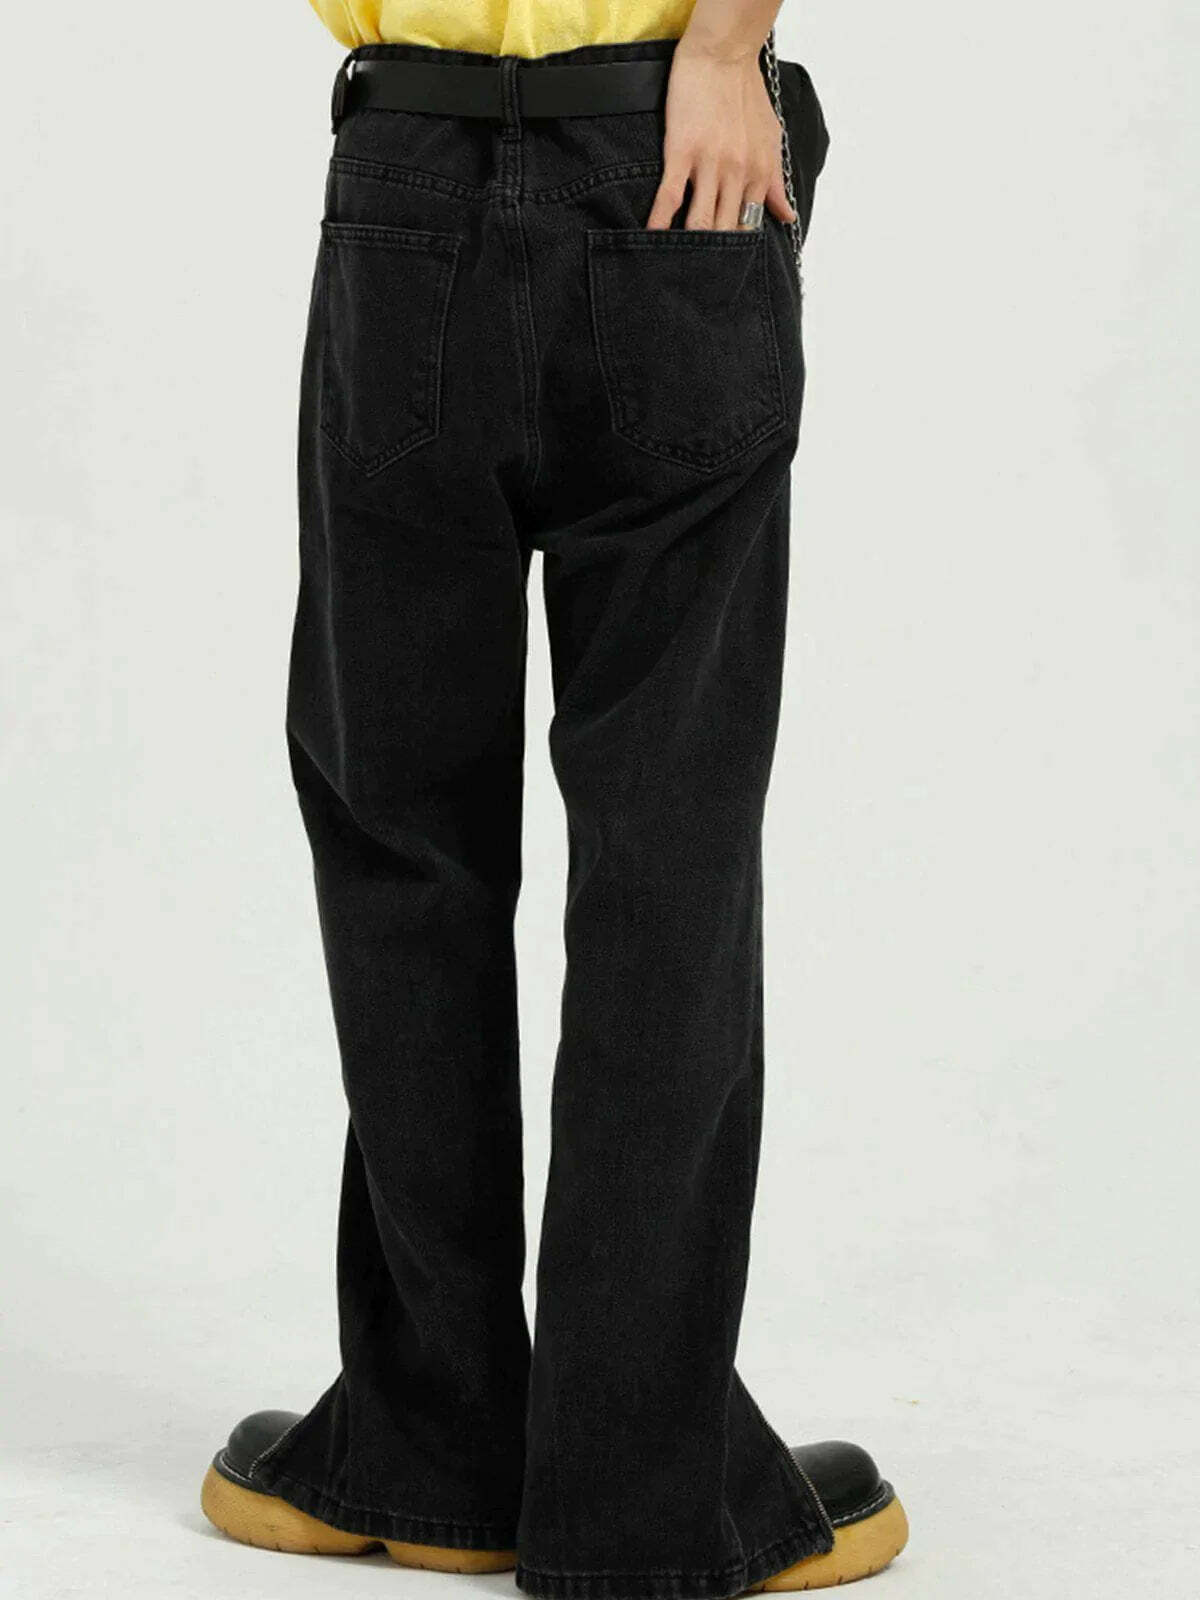 retro zippered jeans edgy & sleek streetwear 1157